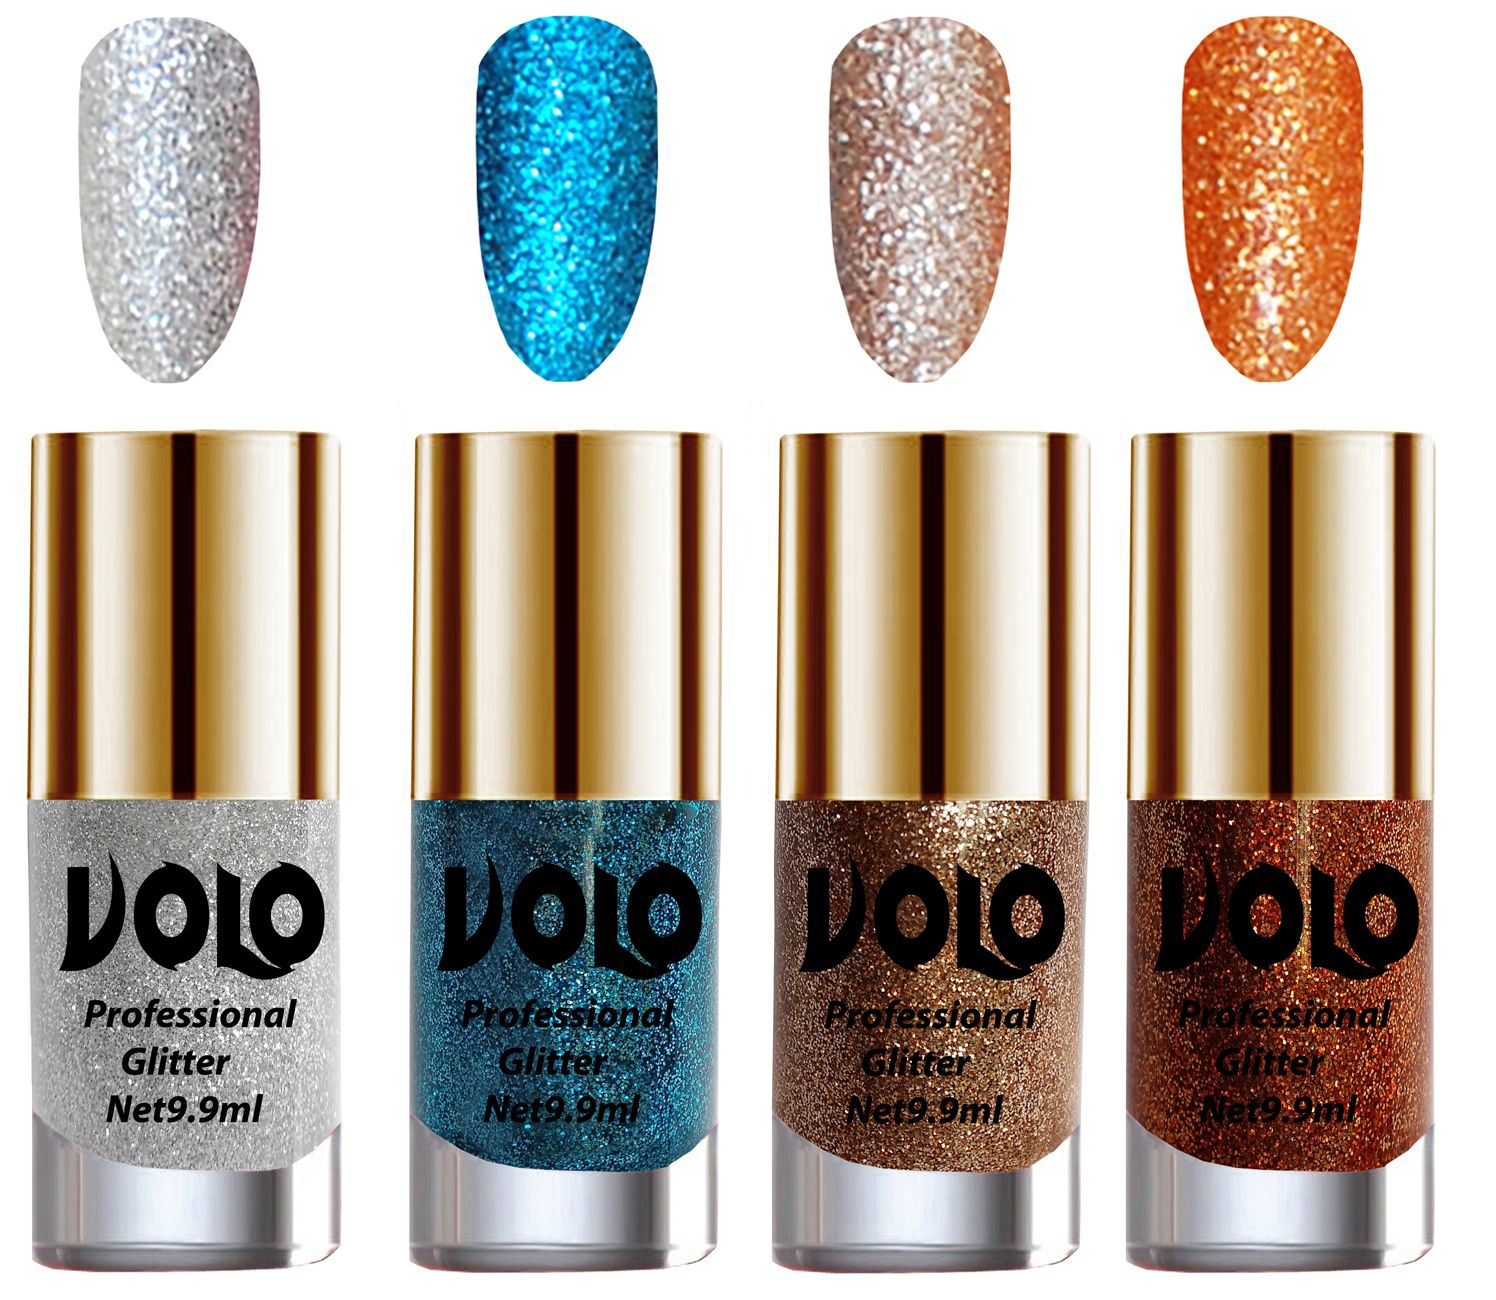     			VOLO Professionally Used Glitter Shine Nail Polish Silver,Blue,Gold Orange Pack of 4 39 mL